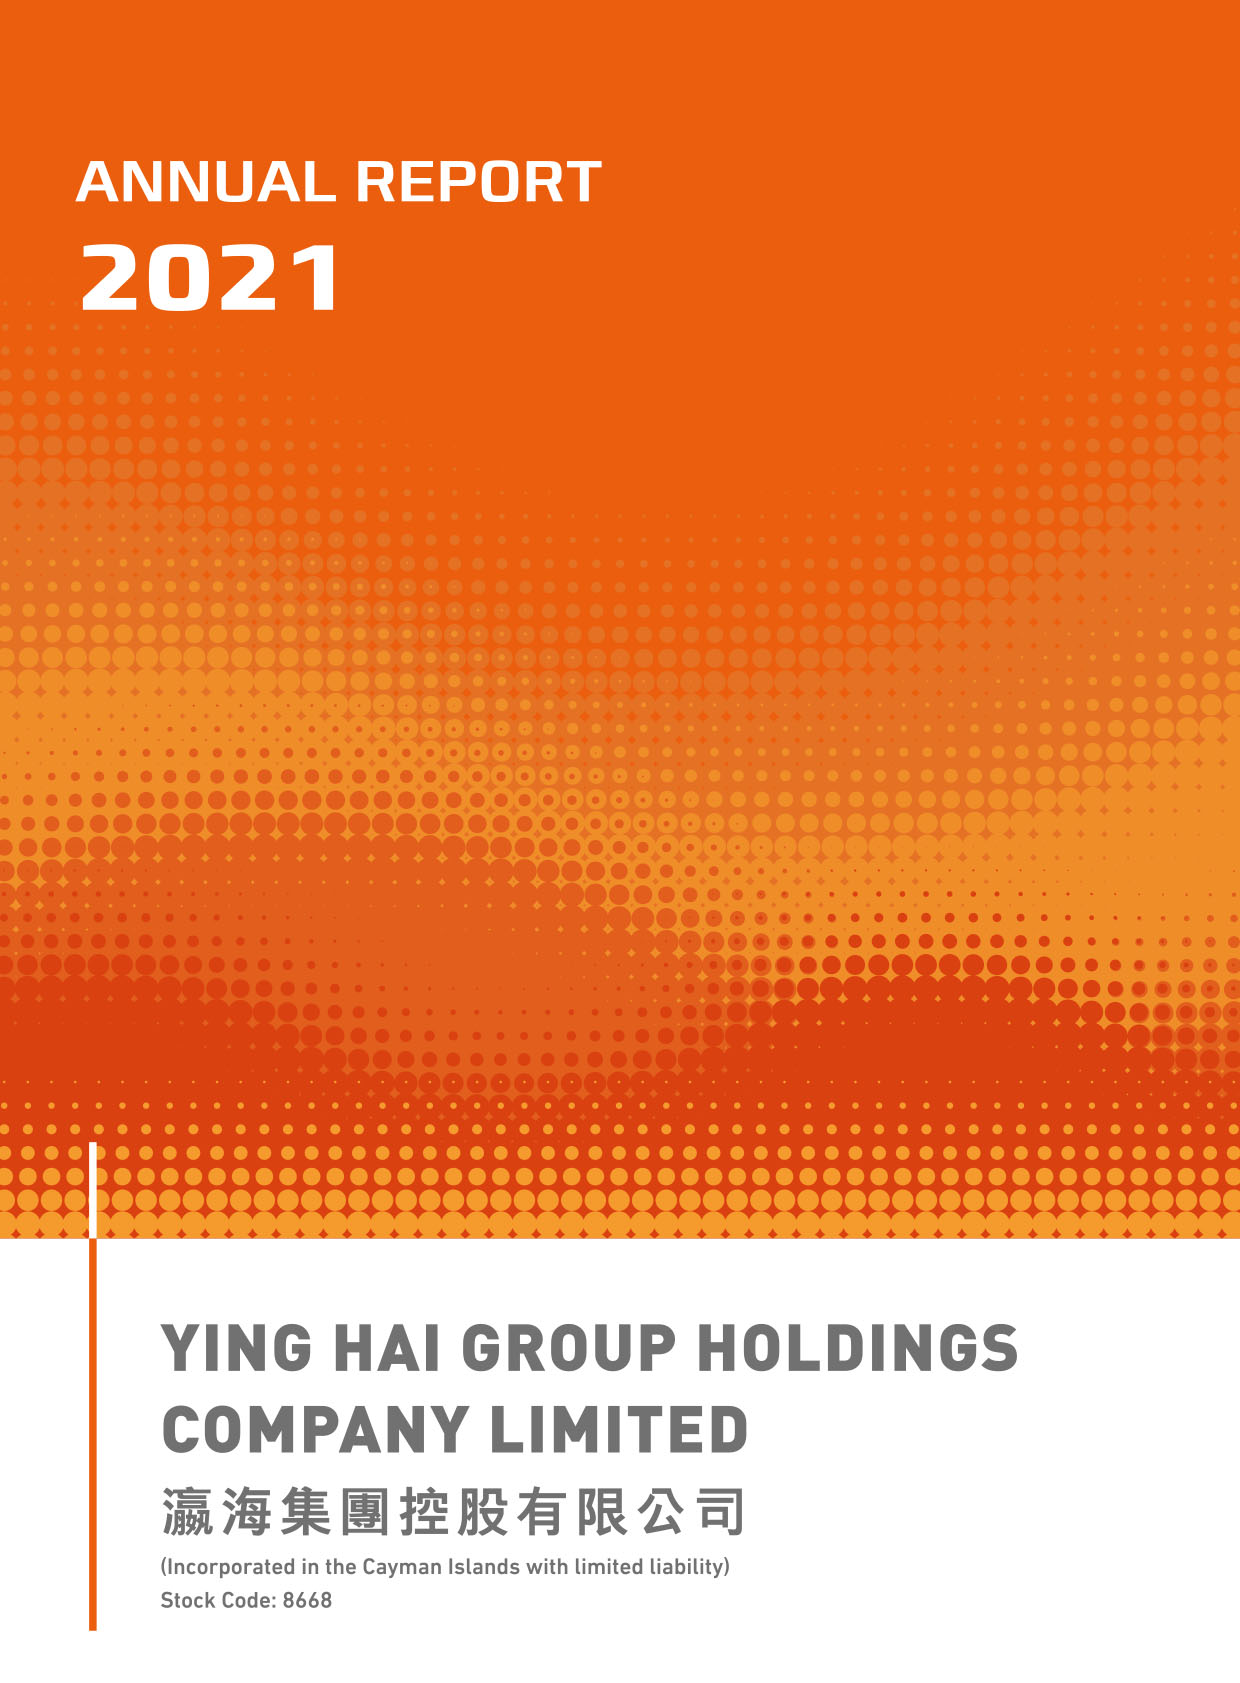 YING HAI GROUP HOLDINGS COMPANY LIMITED